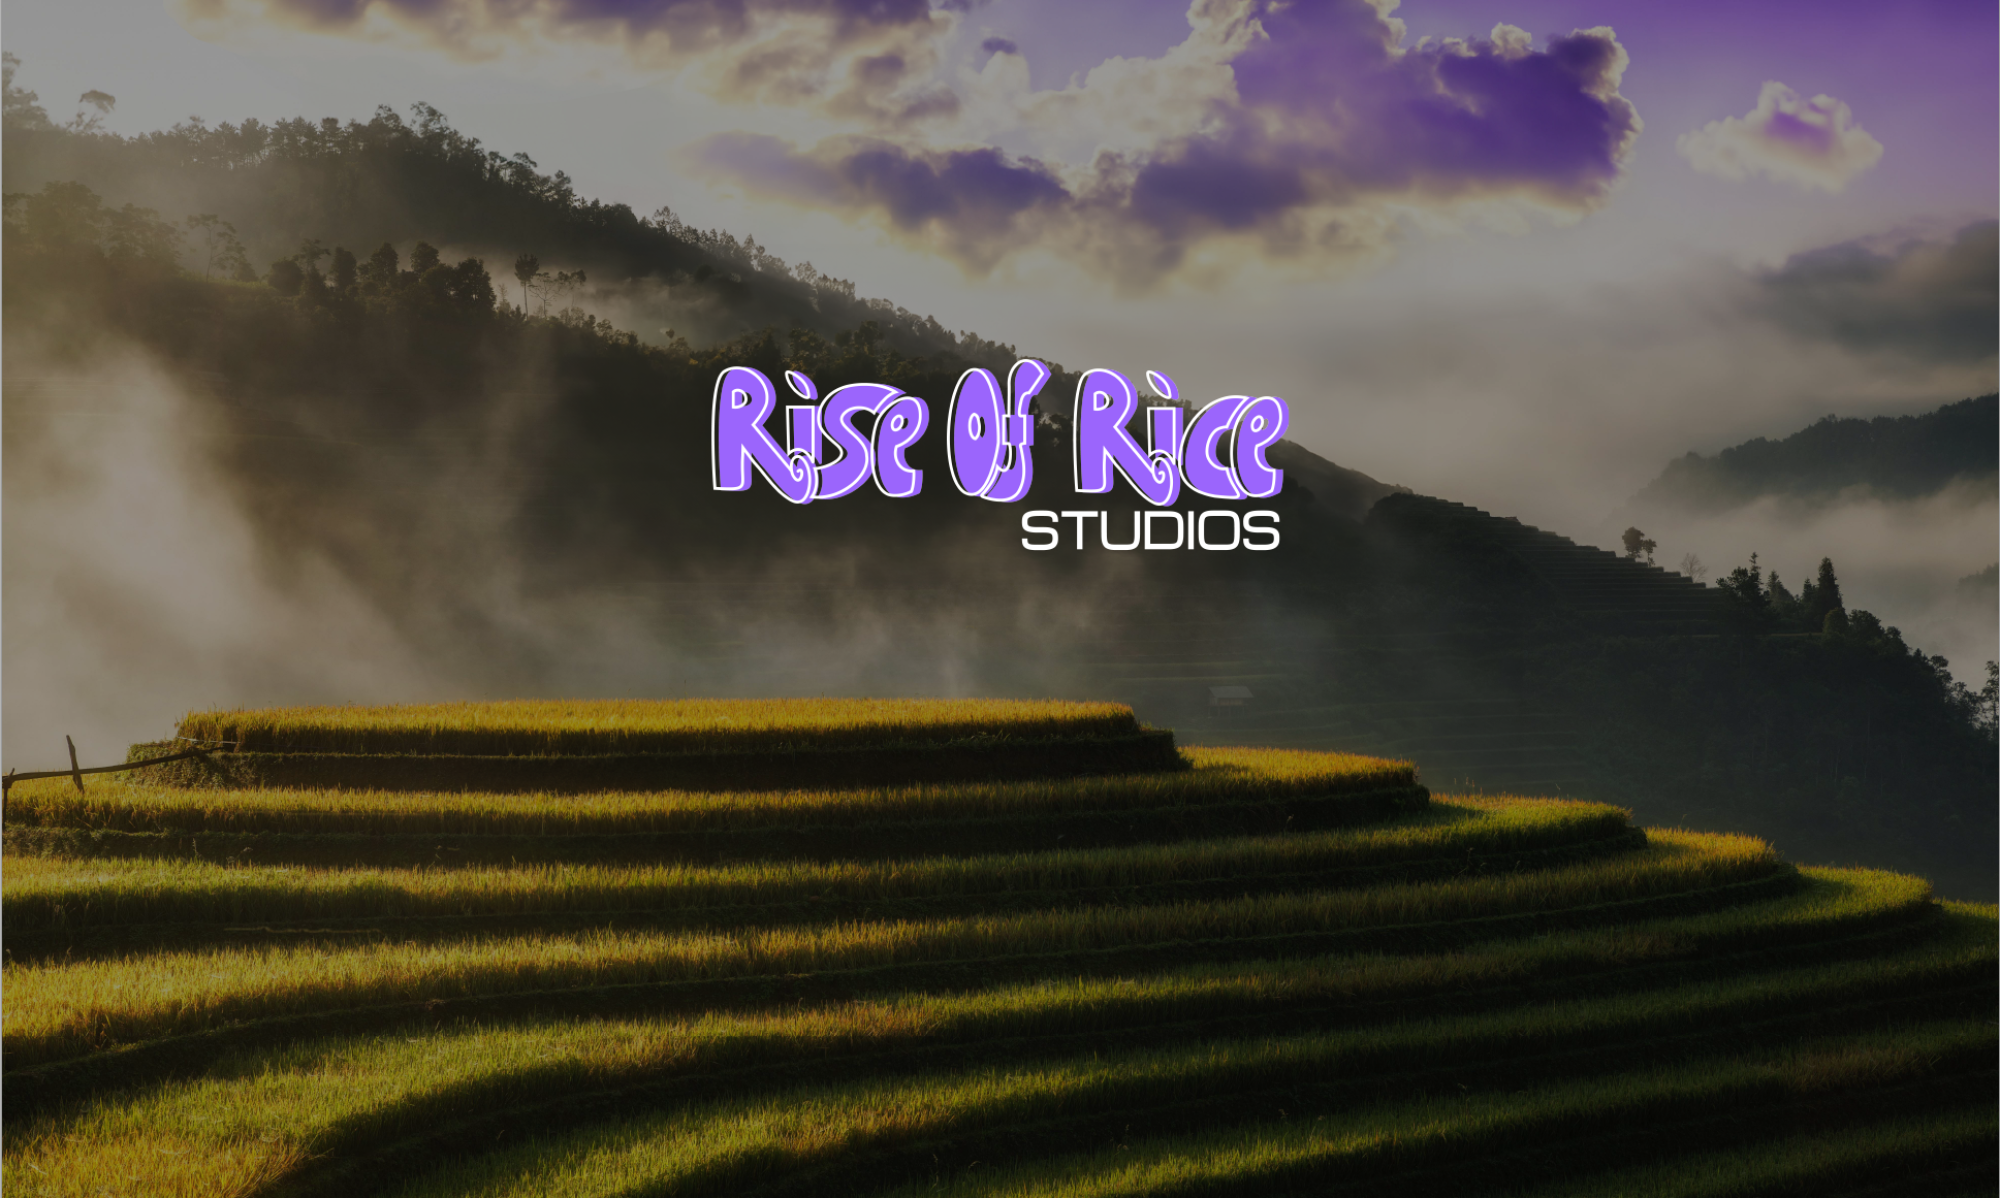 Headerfoto von RiseOfRice Studios / Headerphoto of RiseOfRice Studios